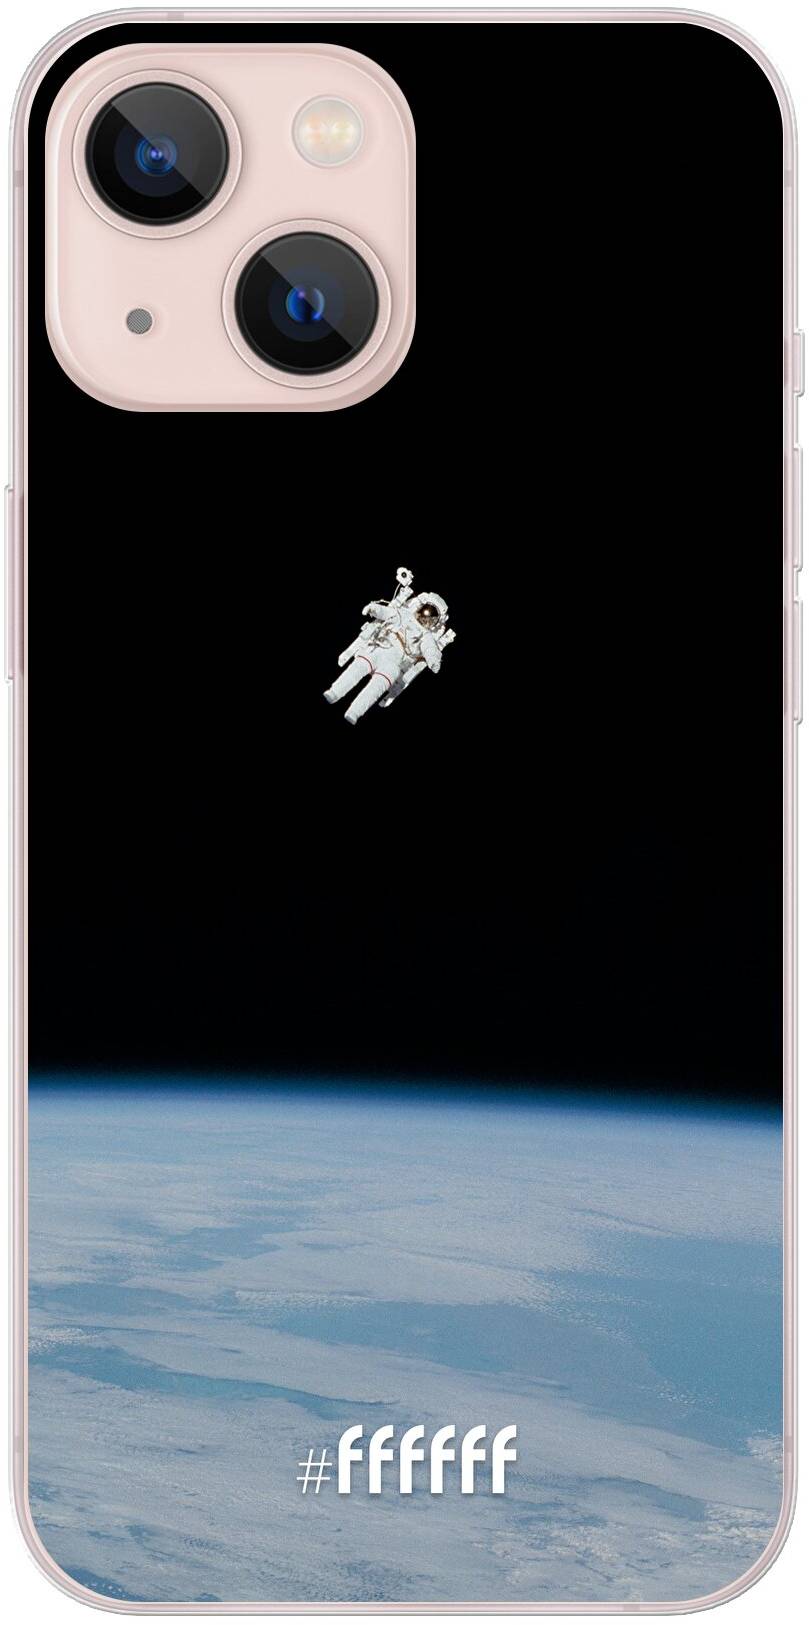 Spacewalk iPhone 13 Mini